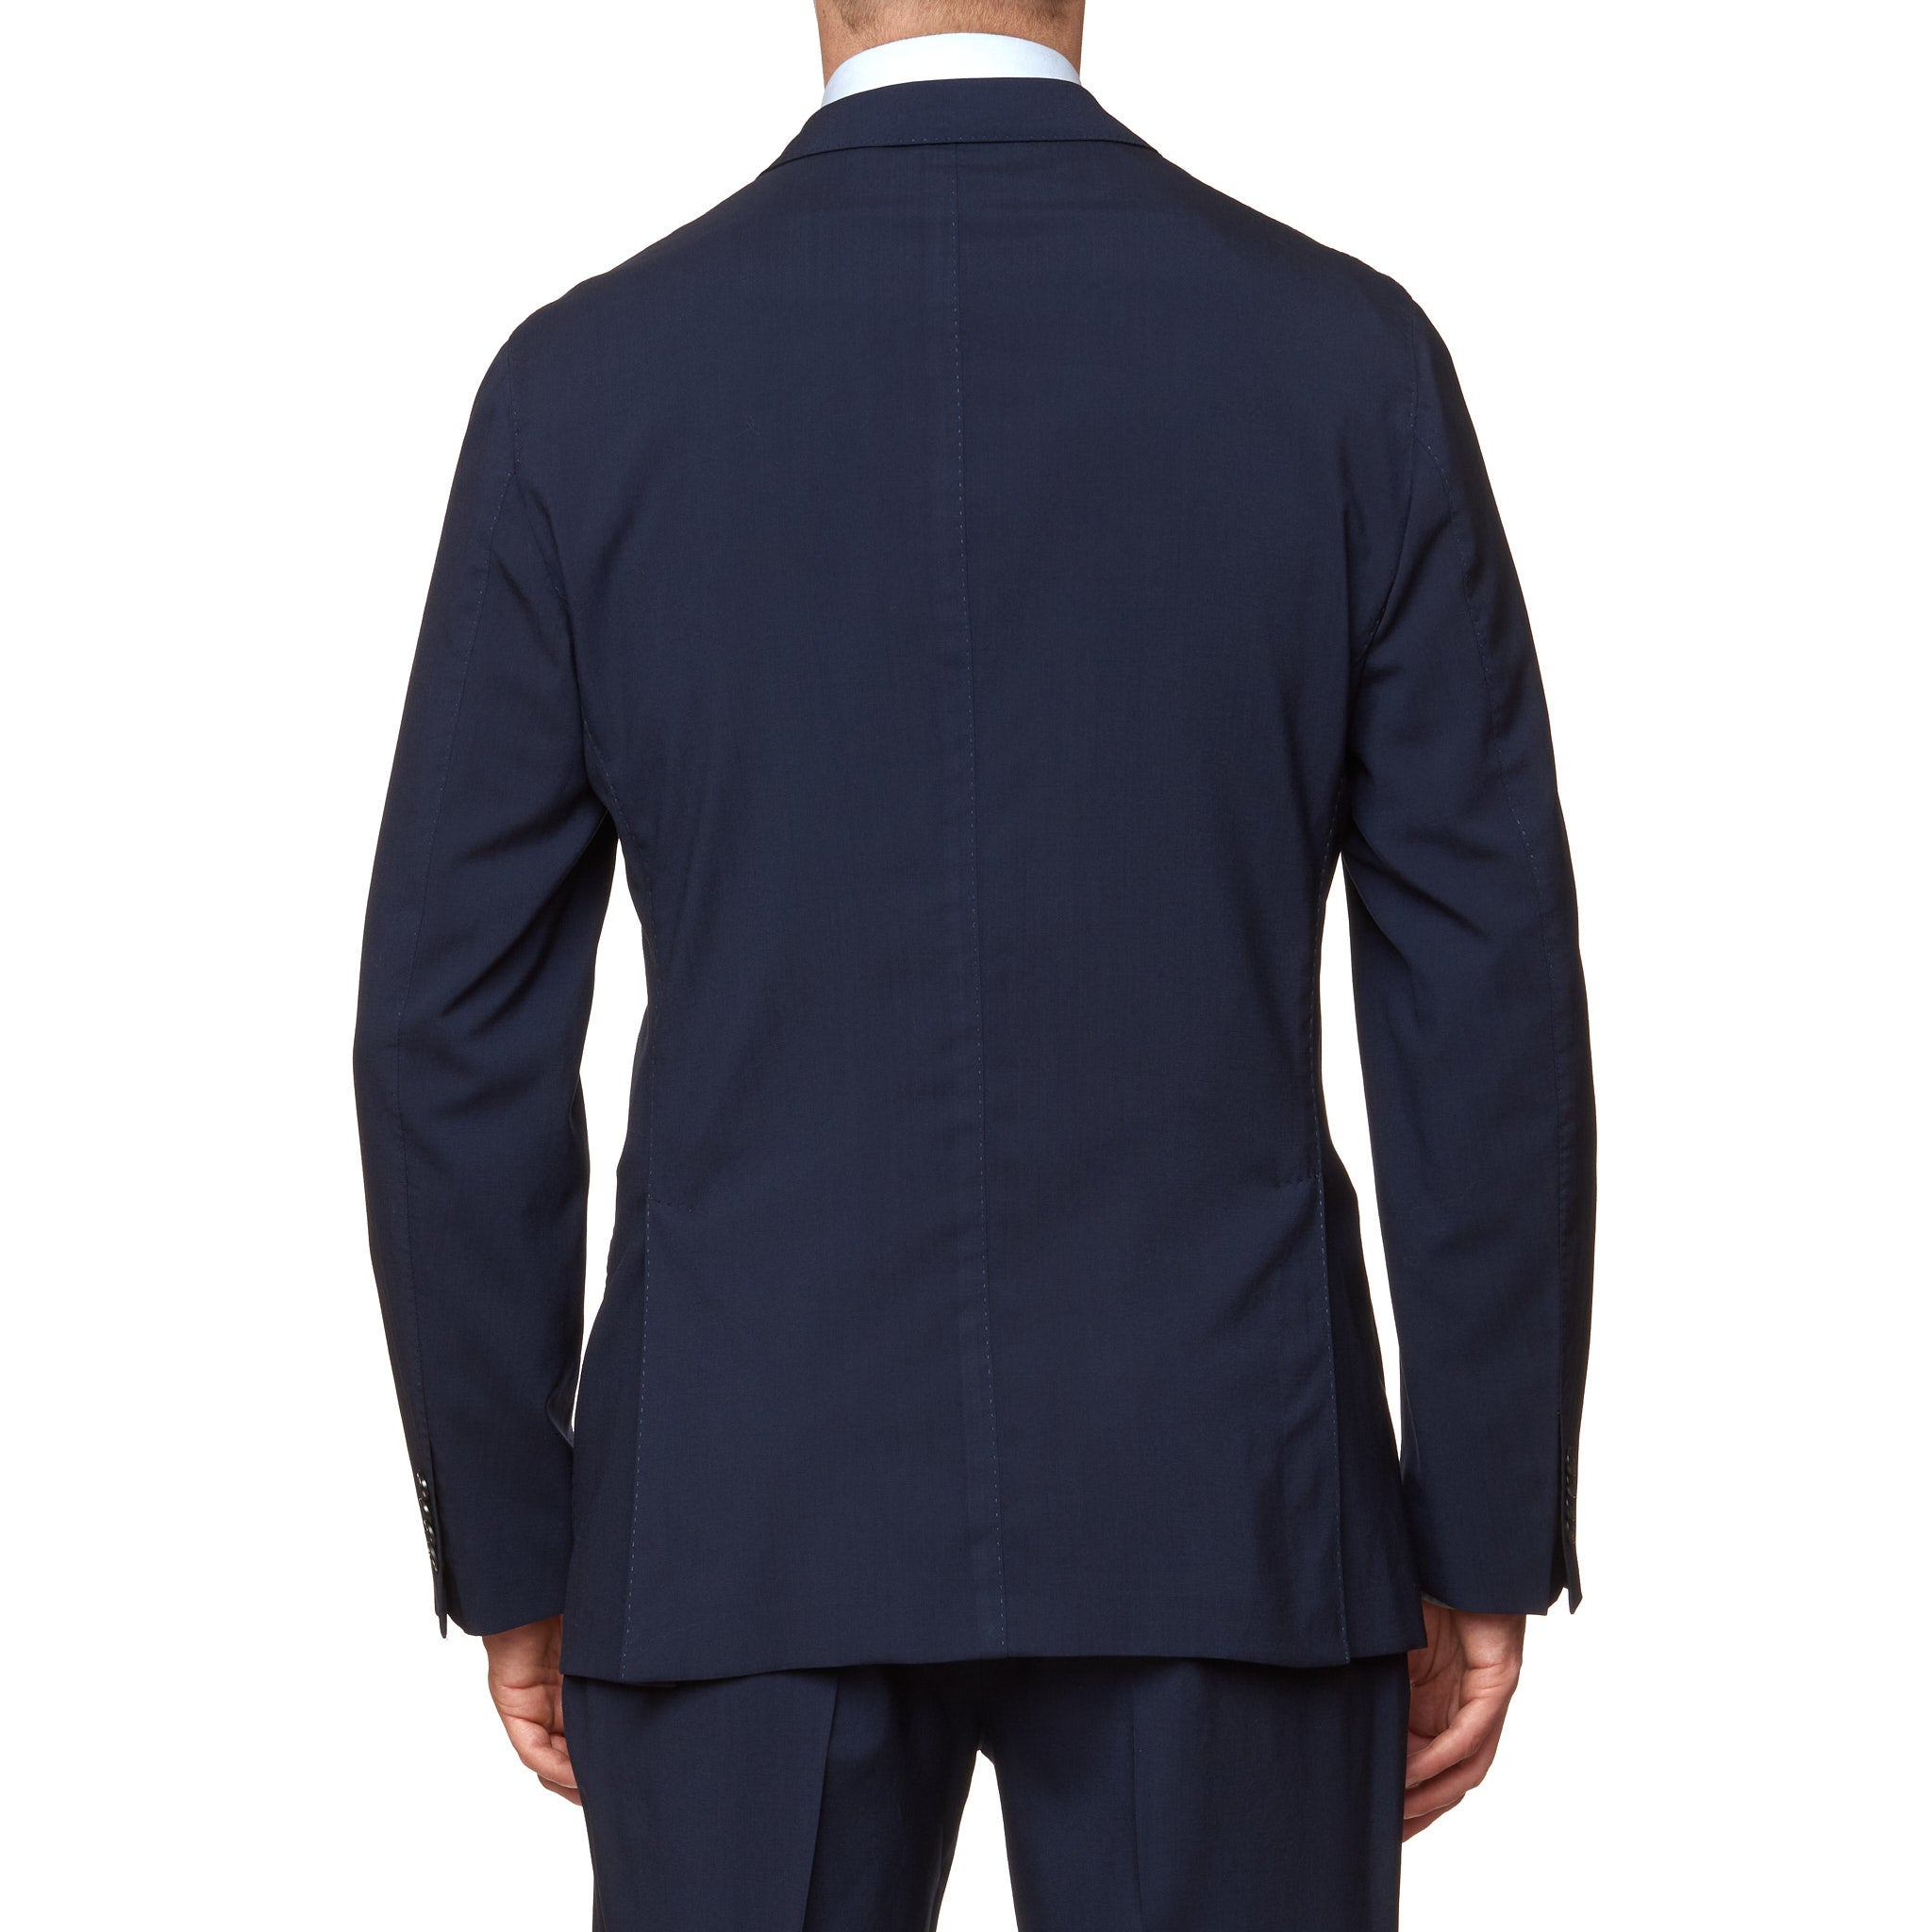 BOGLIOLI Milano "K. Jacket" Navy Blue Virgin Wool Unlined Suit NEW